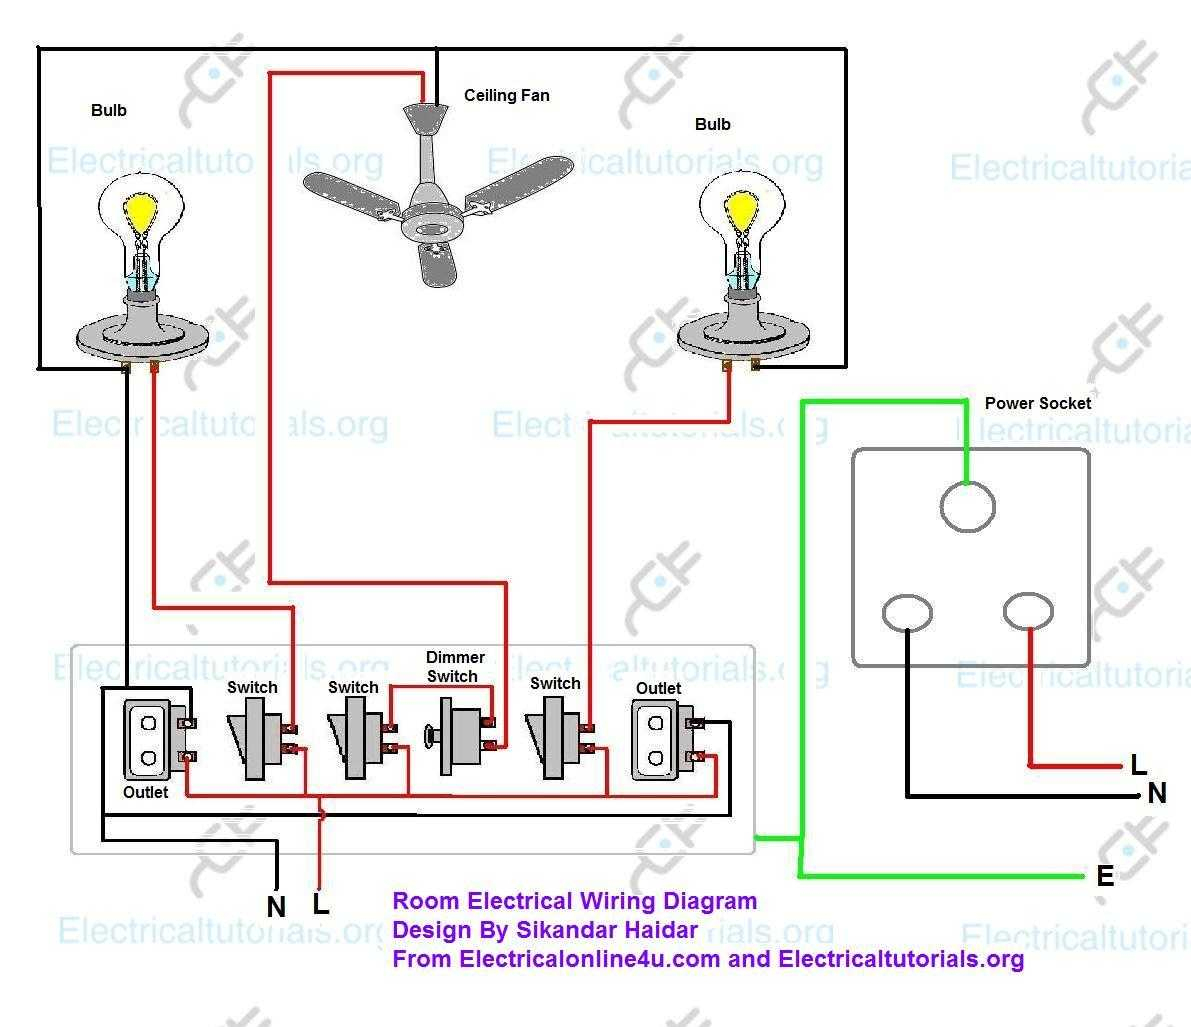 Electrical Wiring Diagram Pdf Diagrams 6 | Hastalavista - Electrical Wiring Diagram Pdf